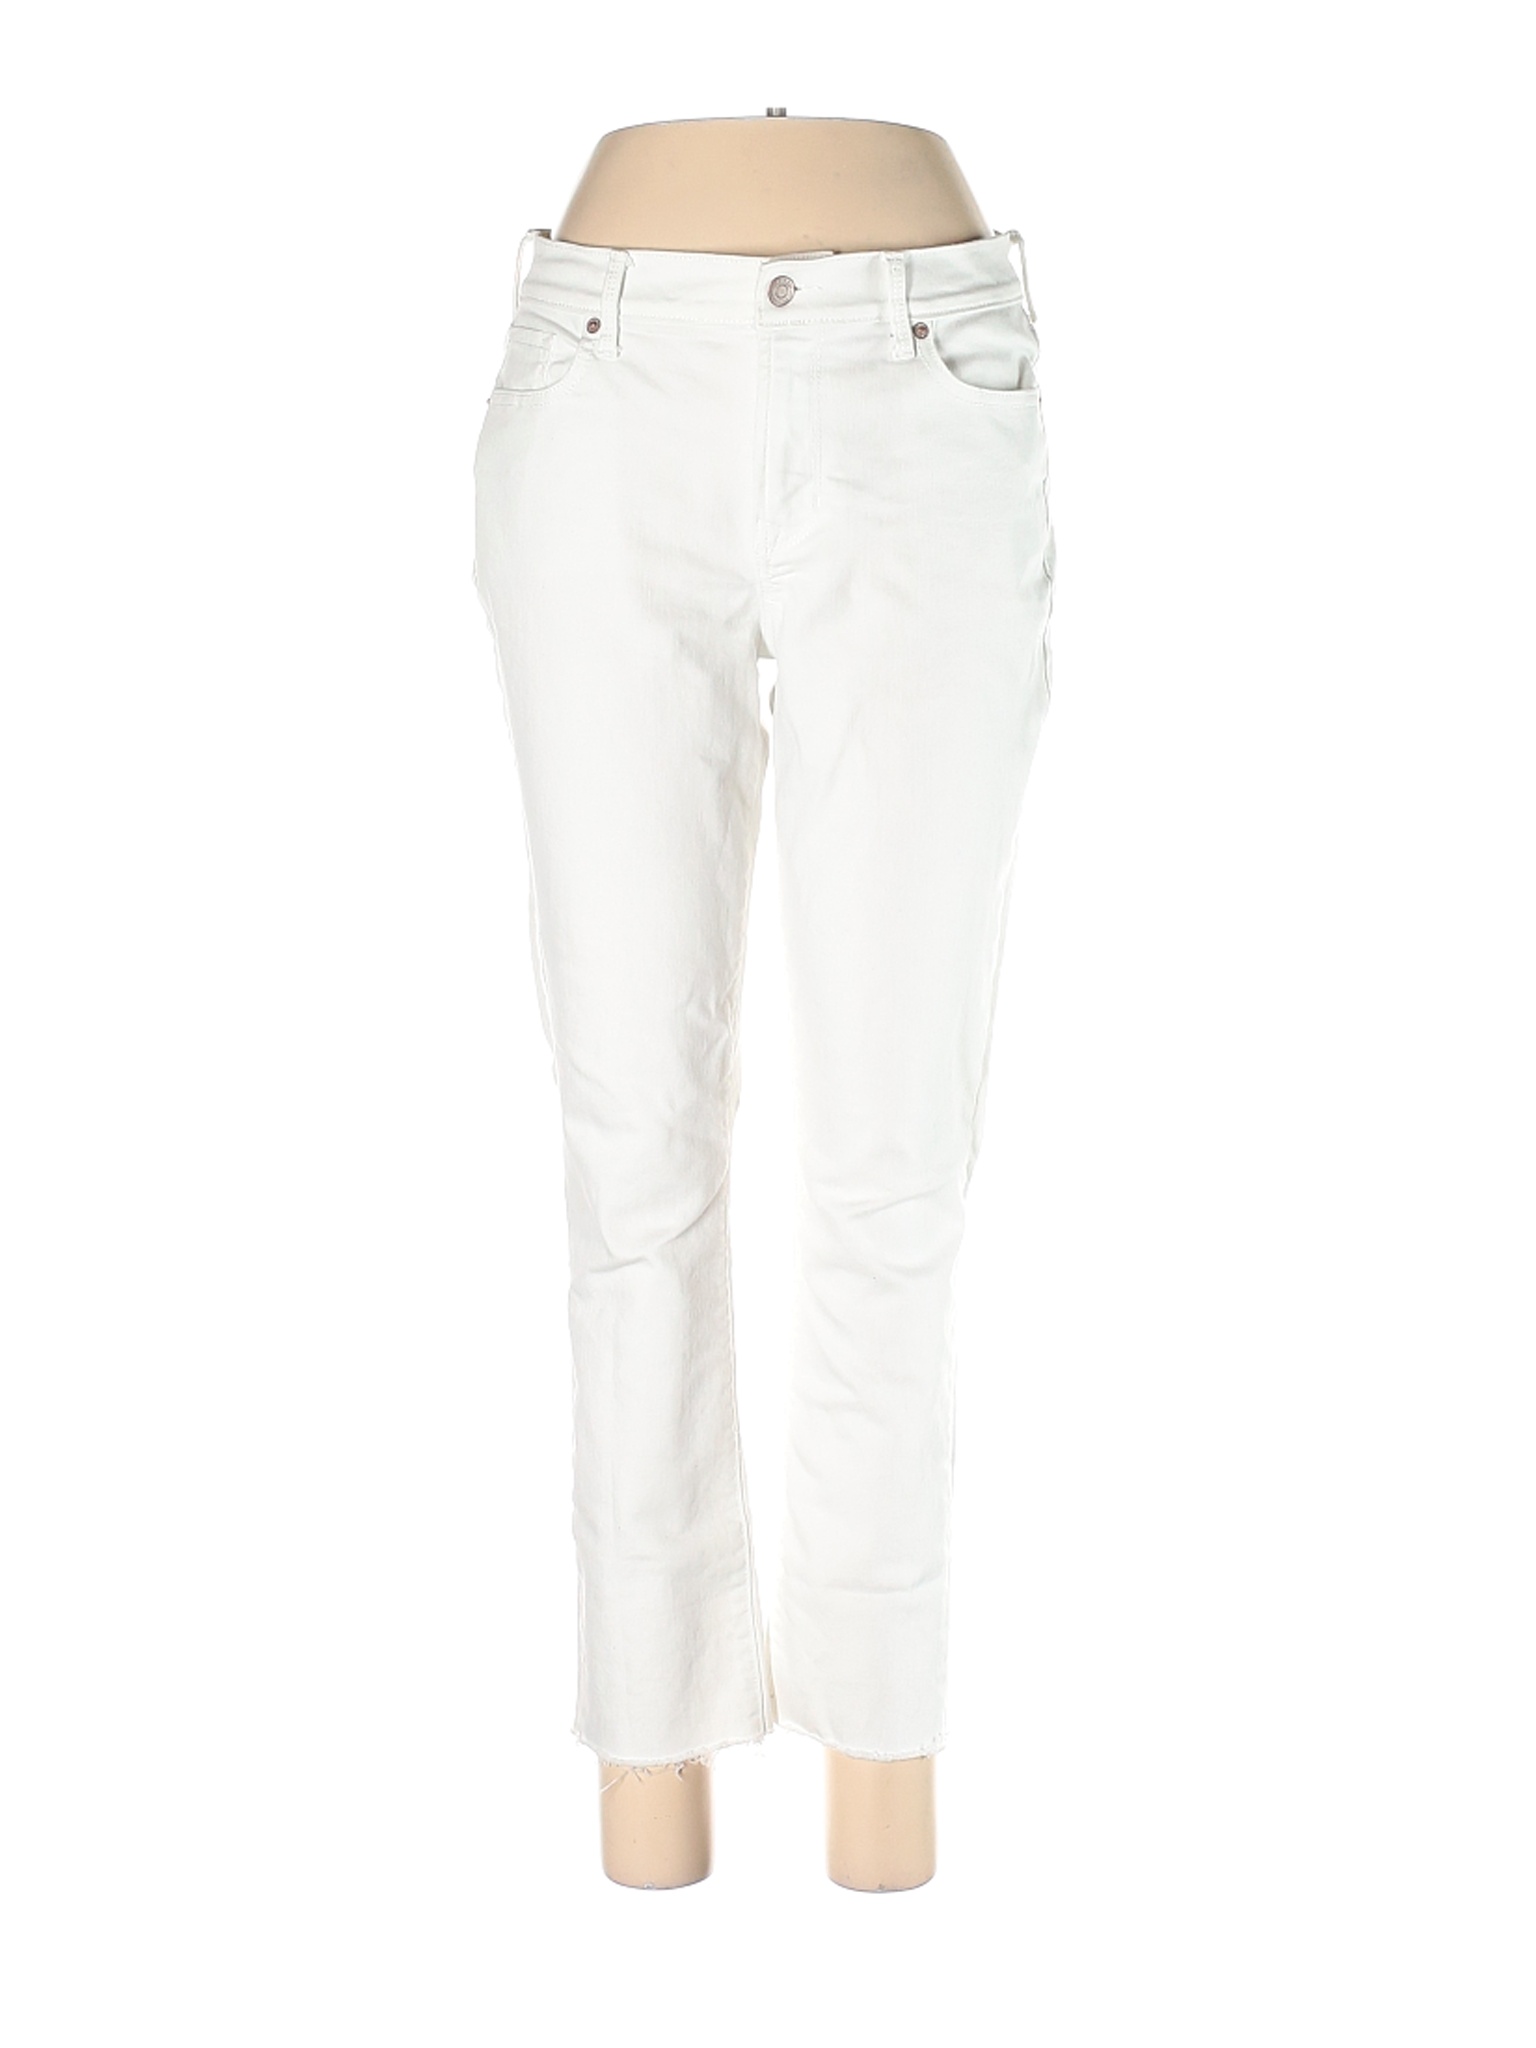 Old Navy Women White Jeans 8 | eBay